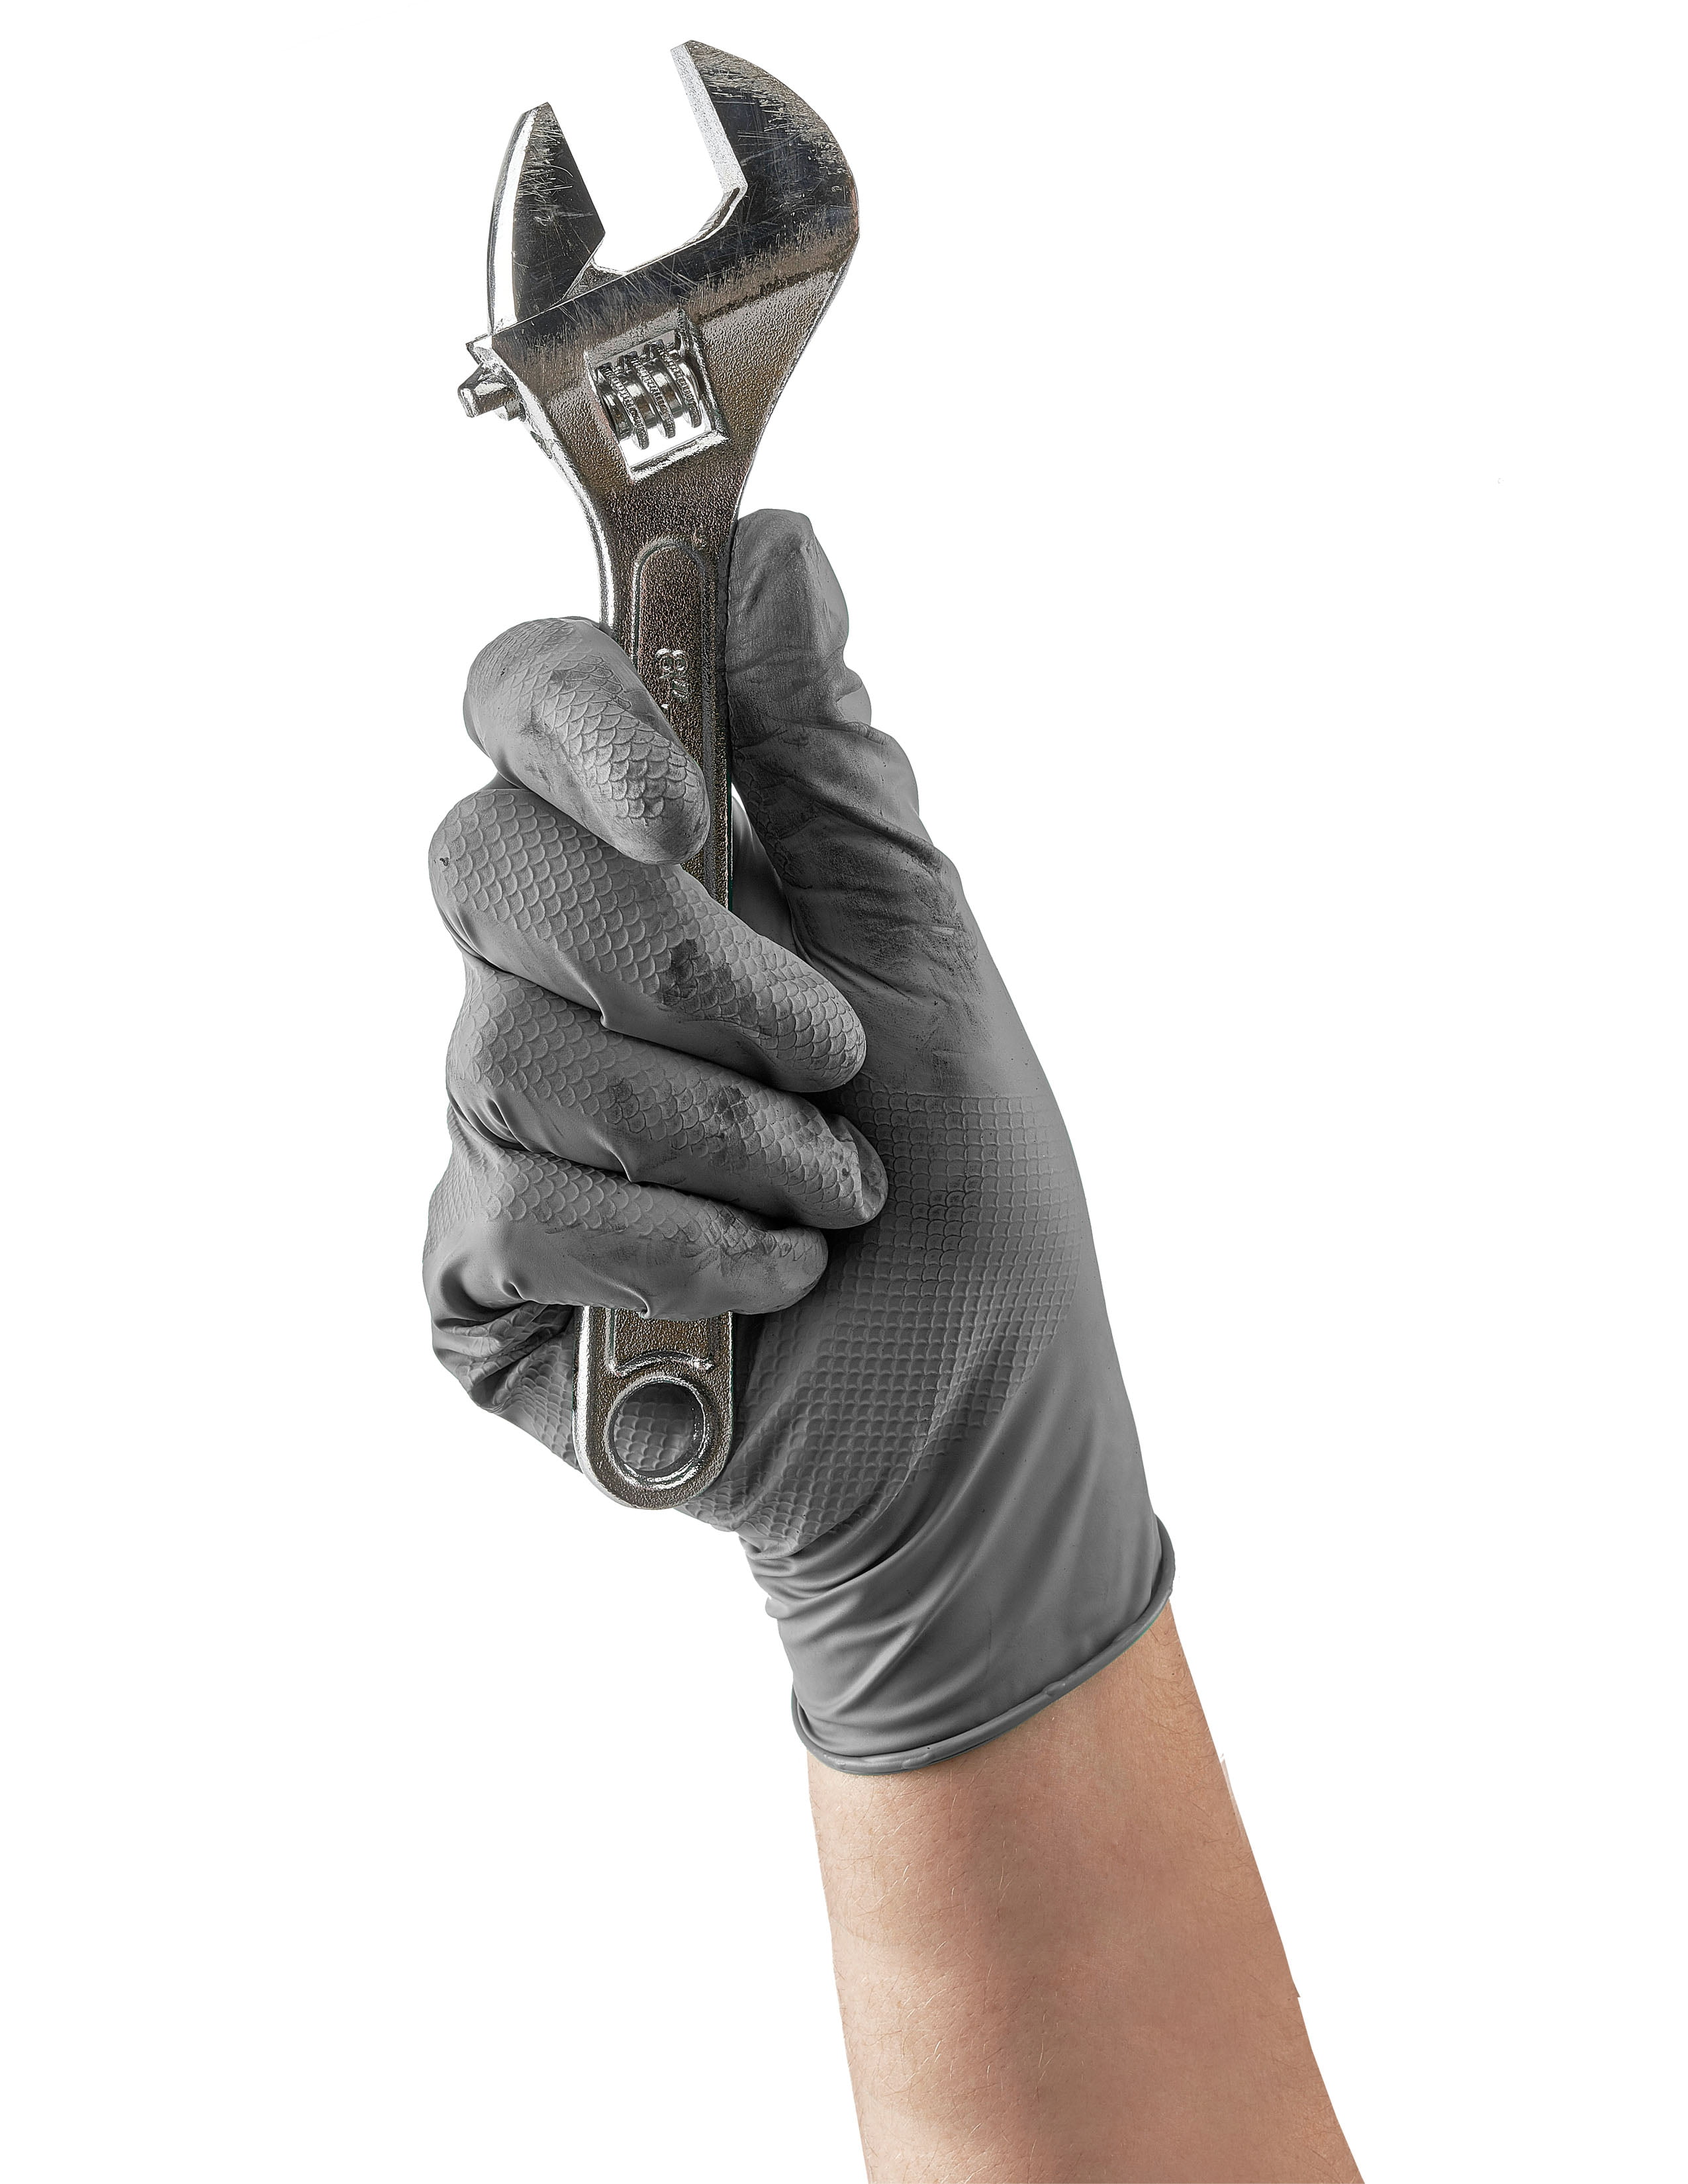 Grease Monkey 27502-16 Gorilla Grip Nitrile Disposable Gloves